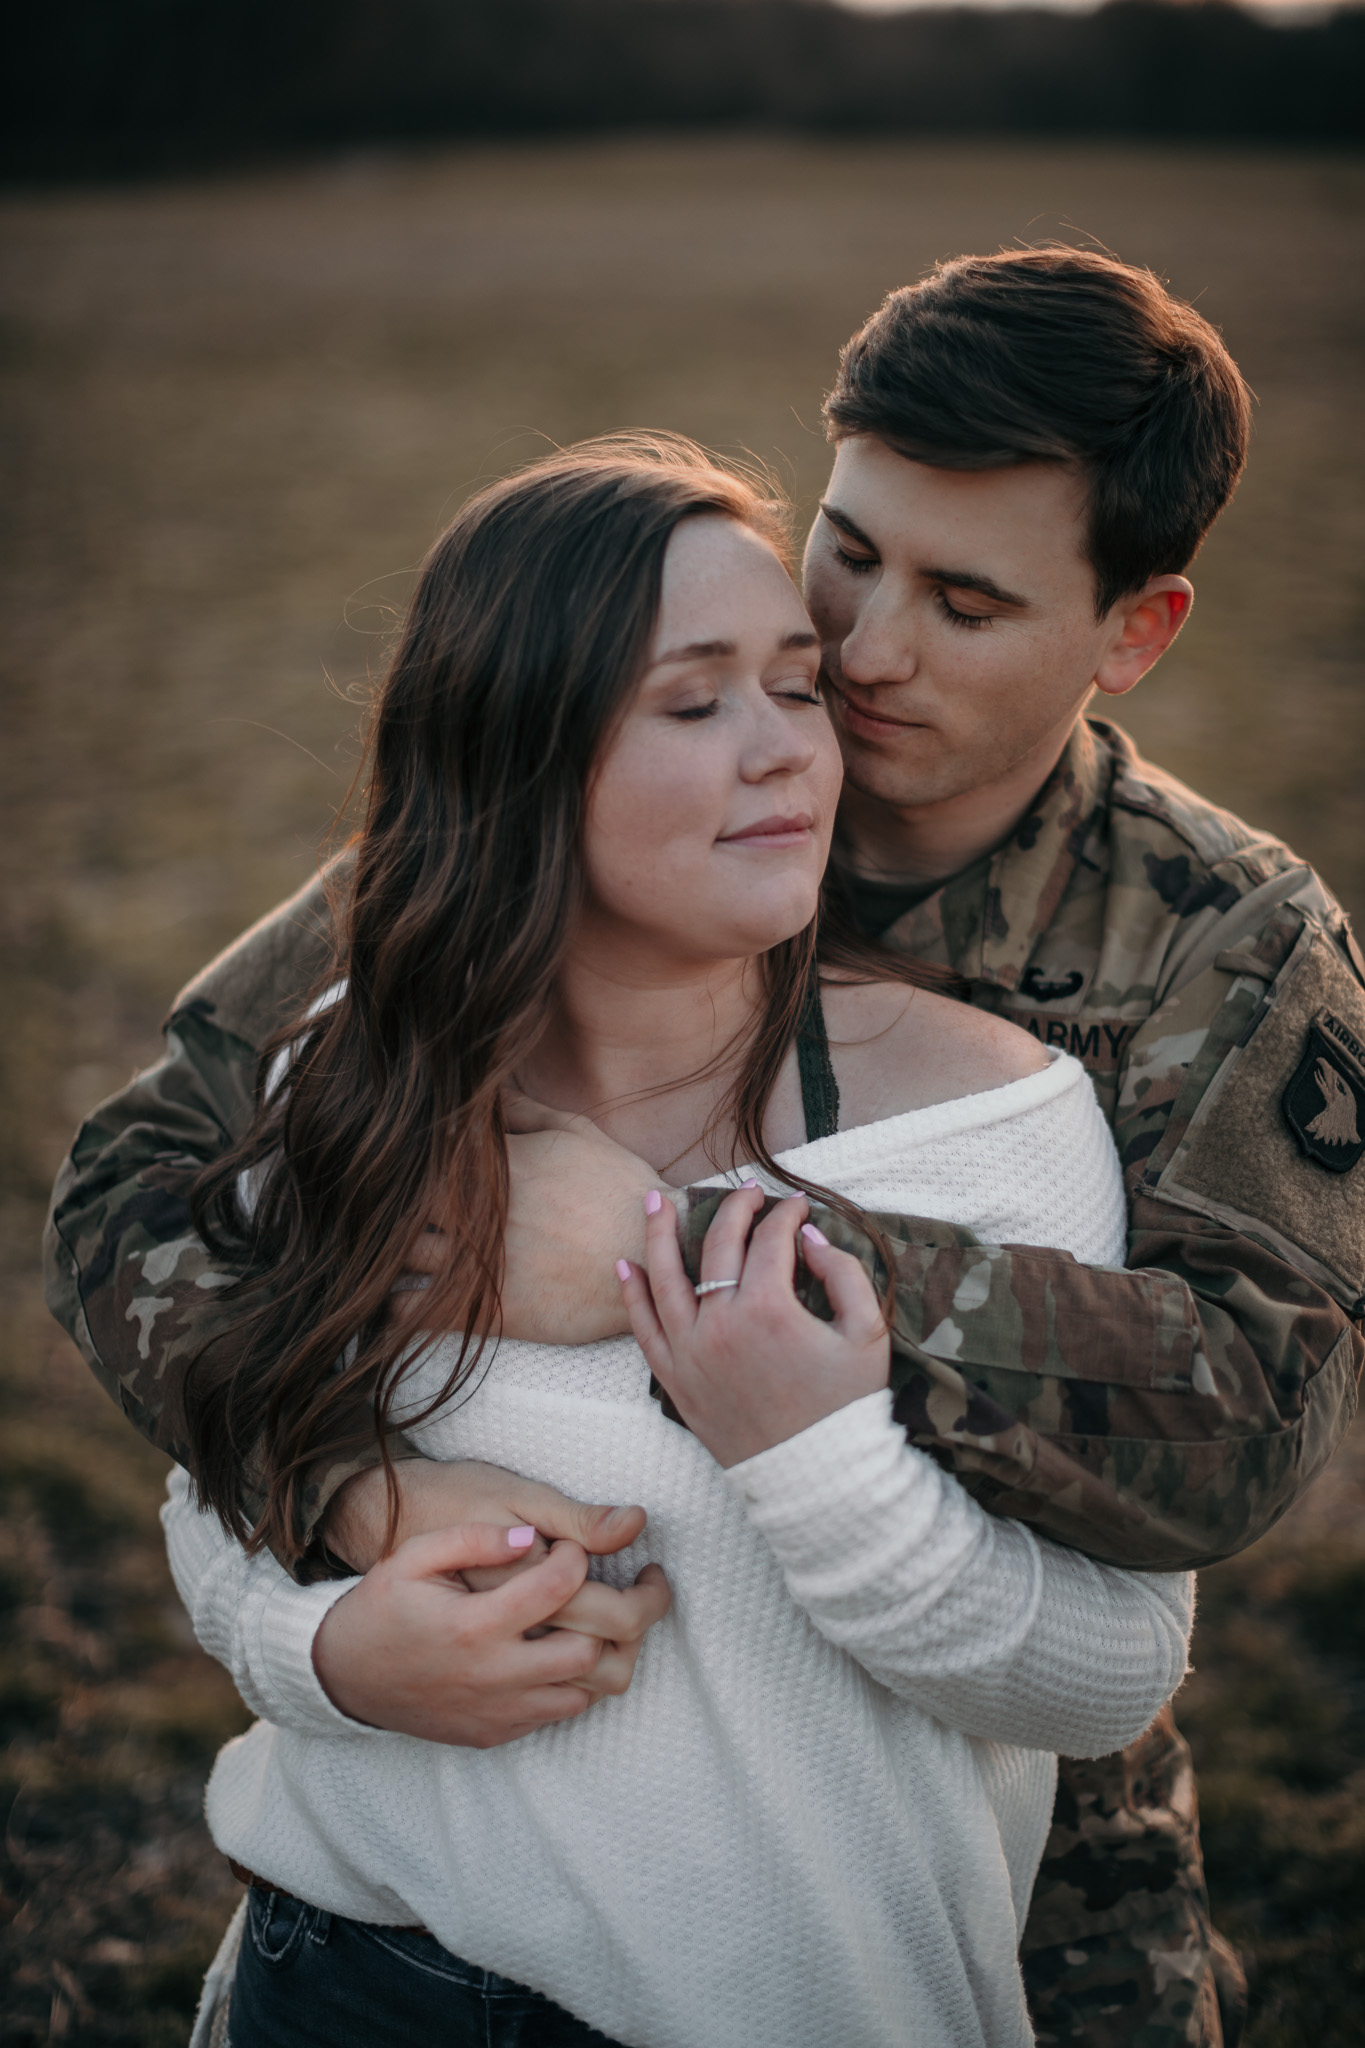 man in army uniform embracing girl